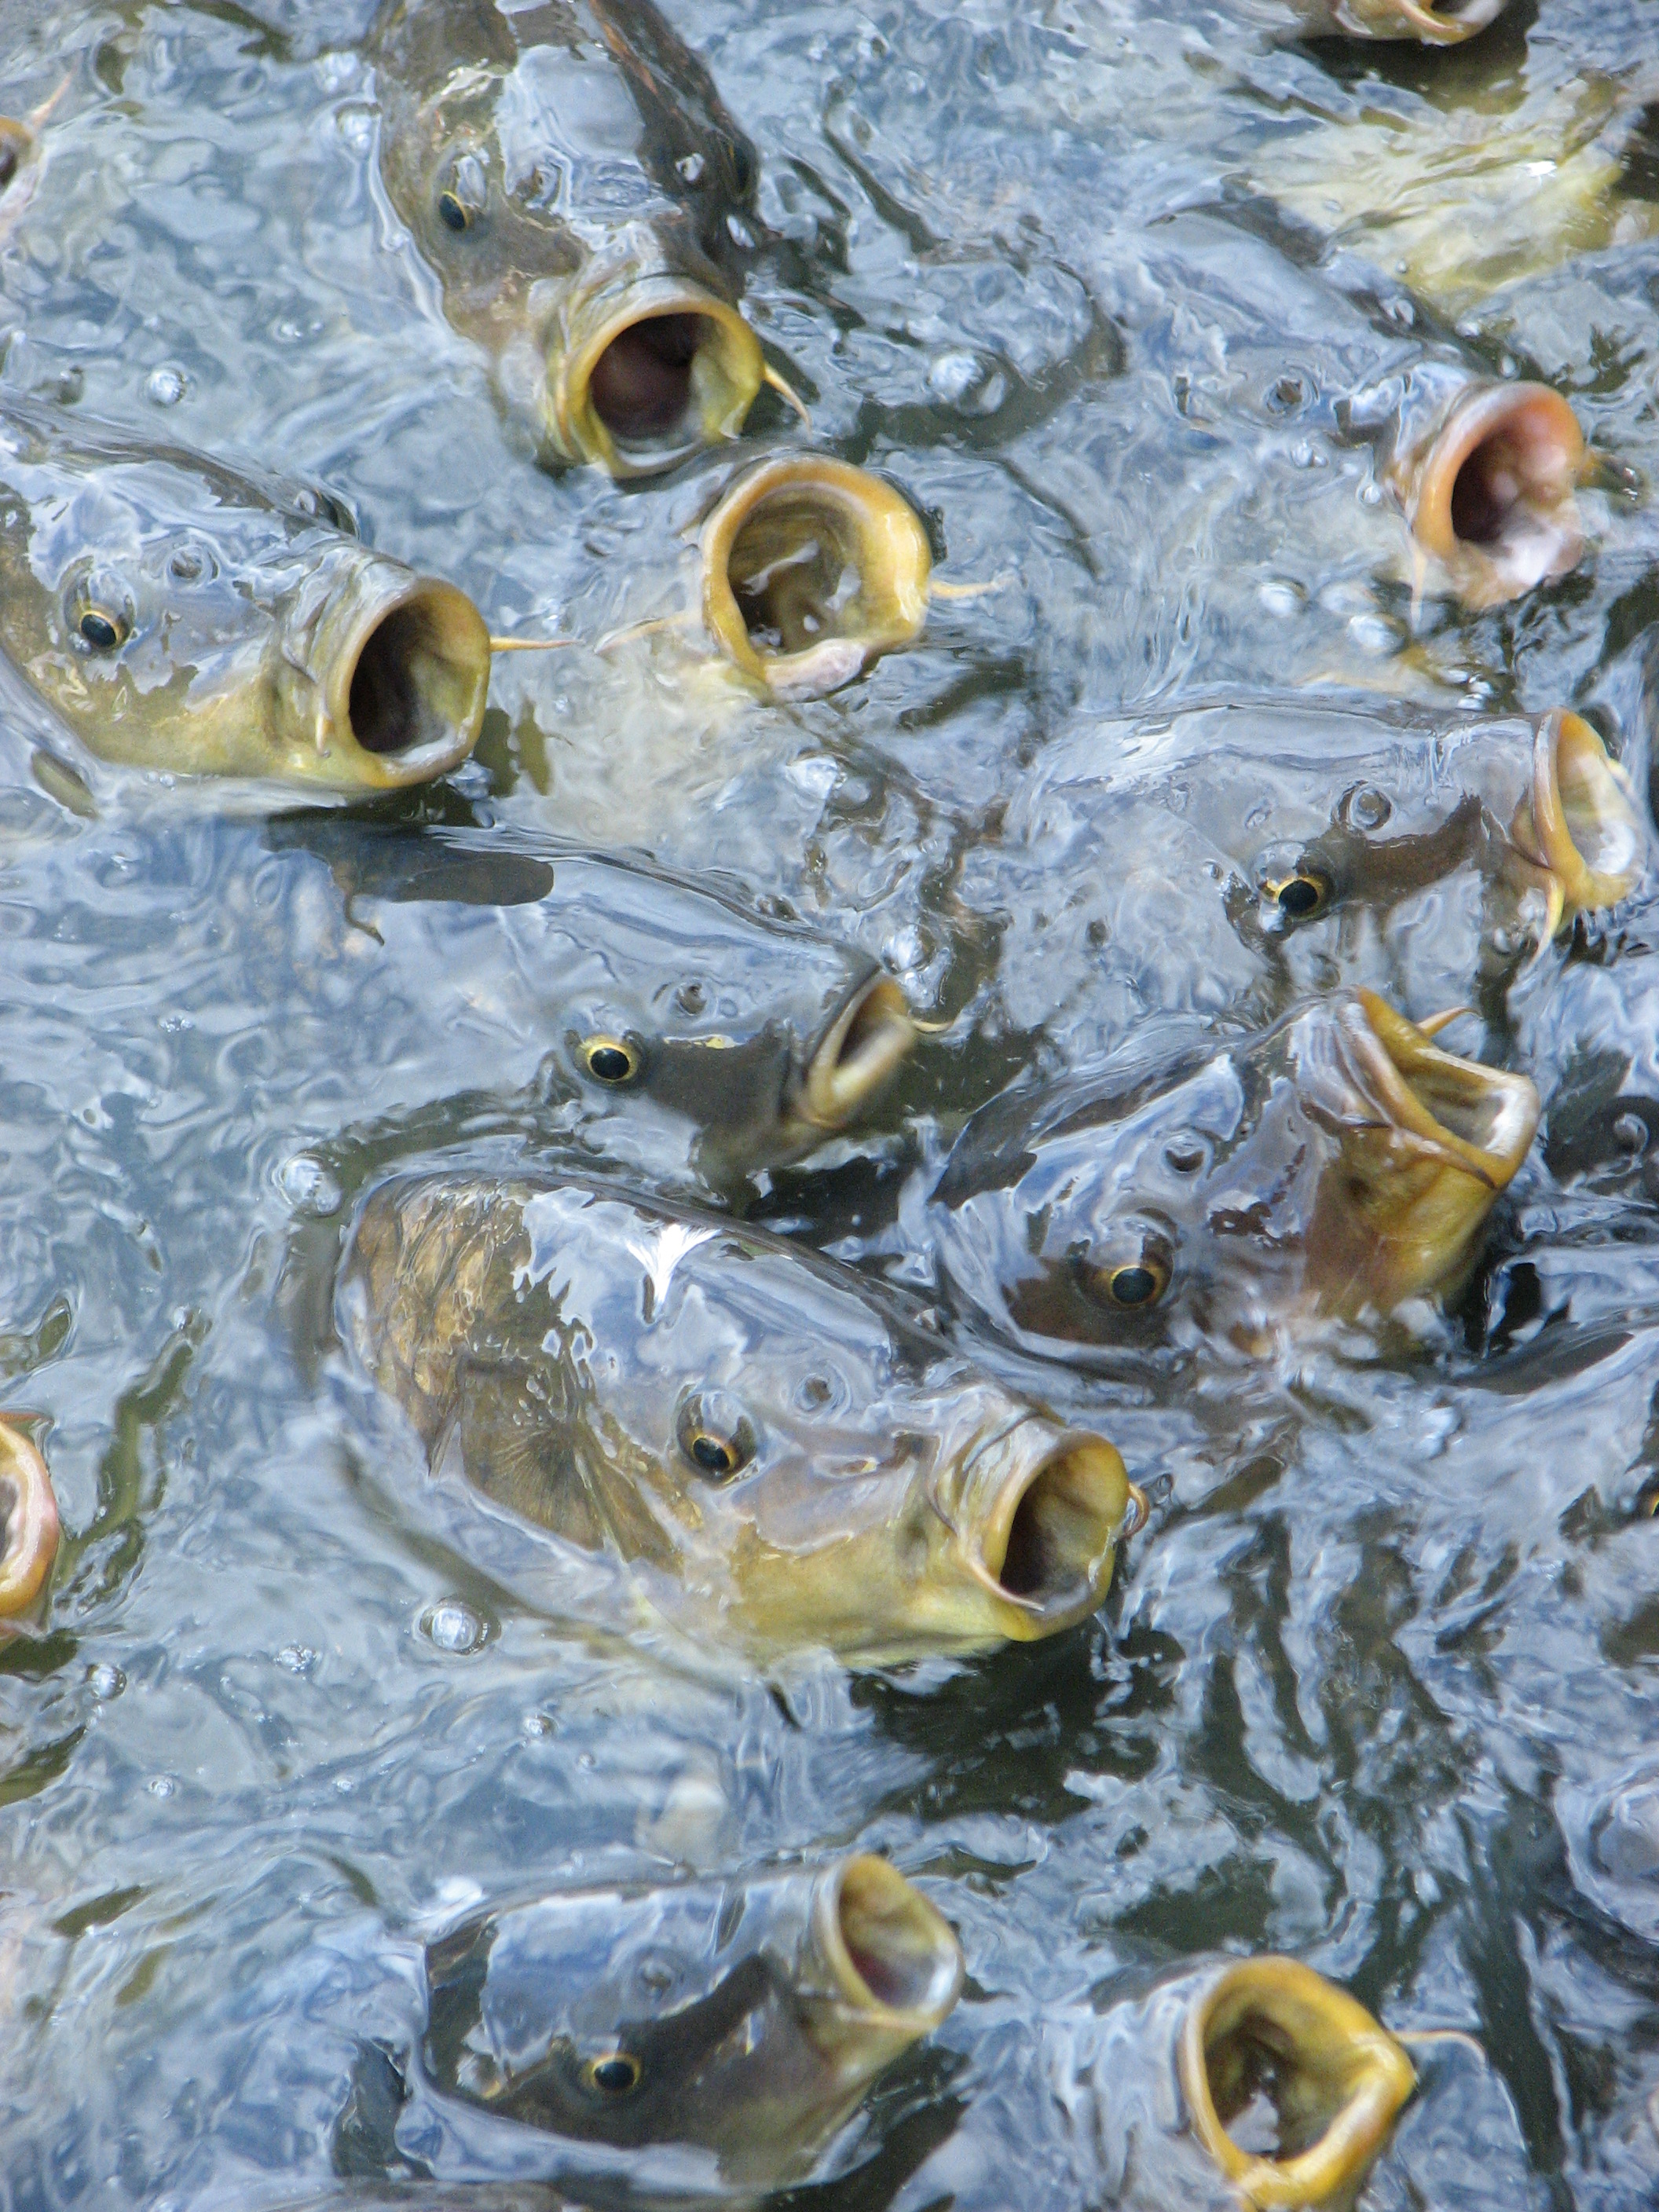 File:Feeding frenzy catfish.JPG - Wikimedia Commons